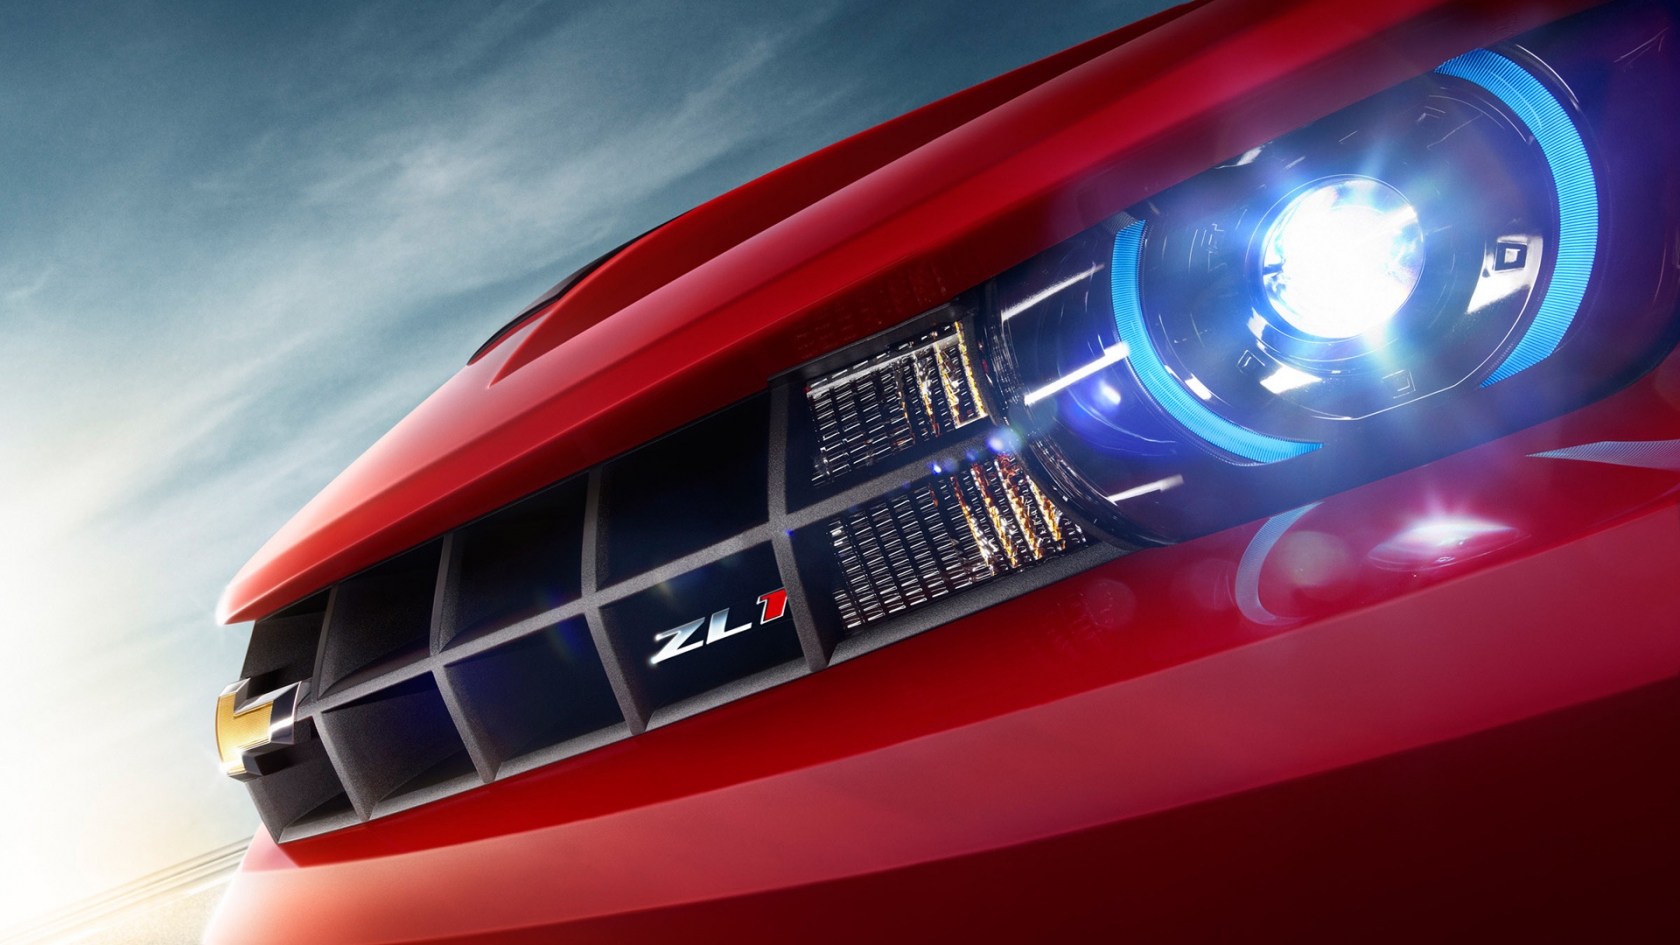 2012 Chevy Camaro ZL1 Headlight for 1680 x 945 HDTV resolution